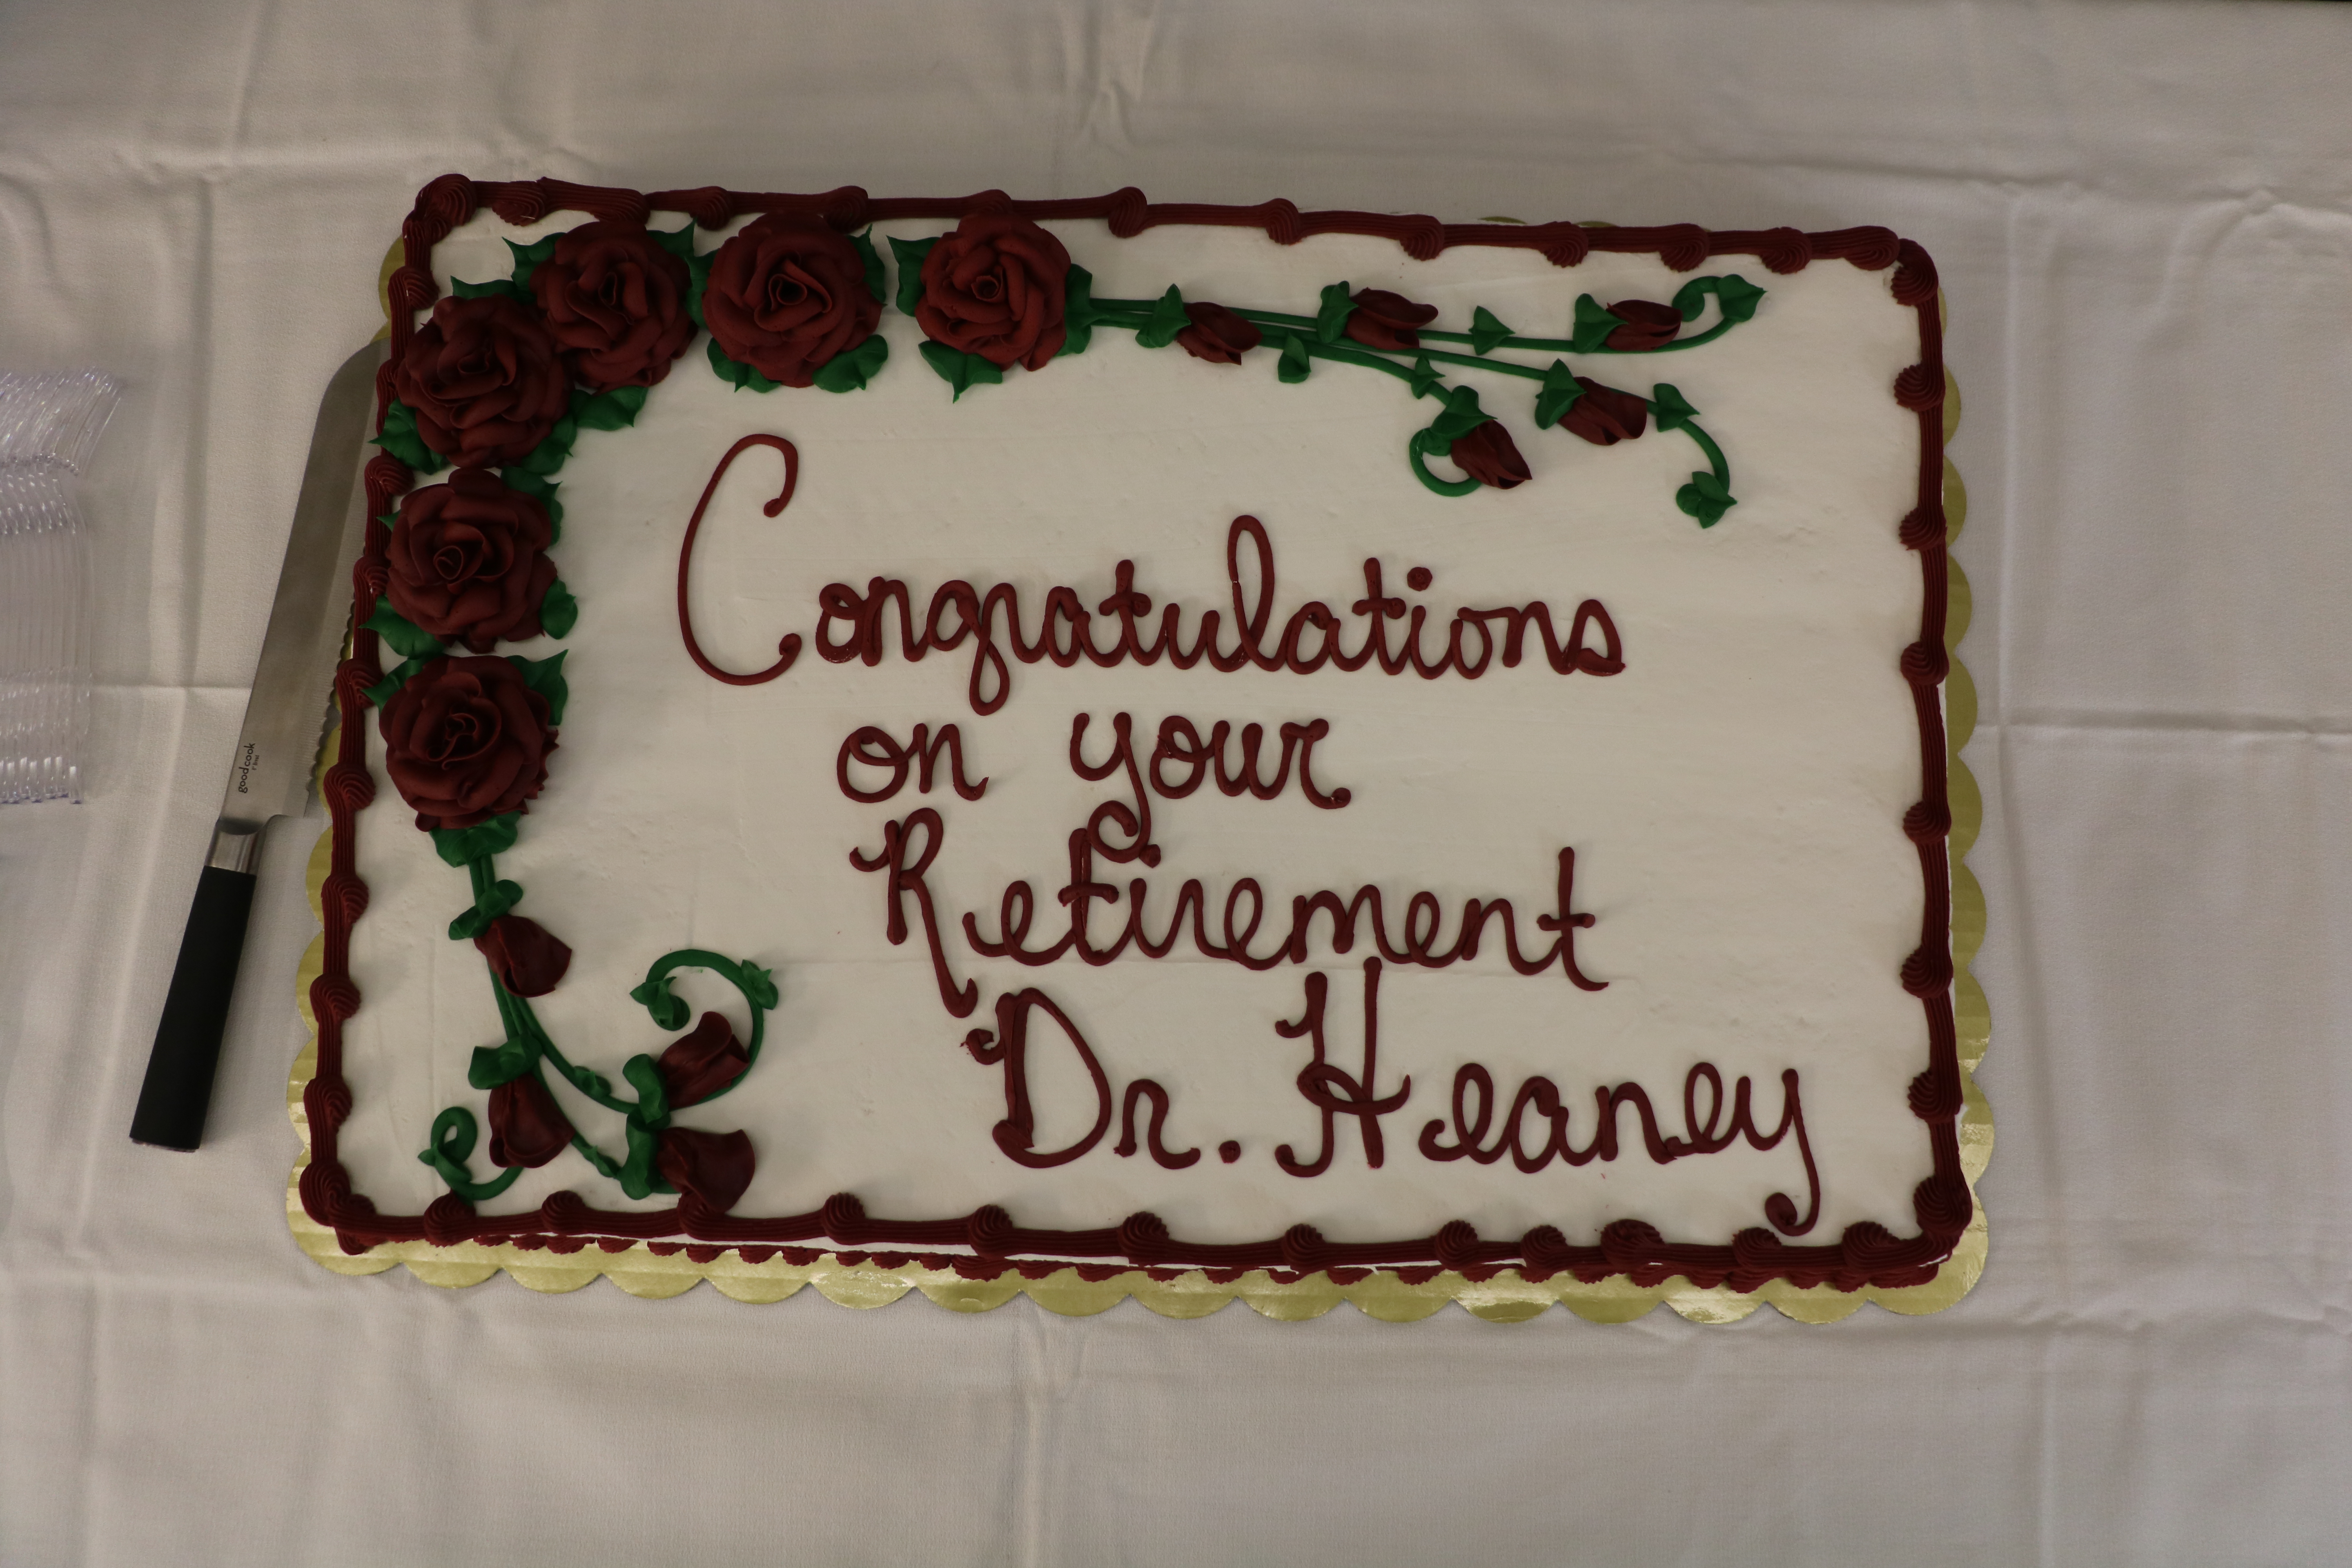 Dr. Michael Heaney Retires